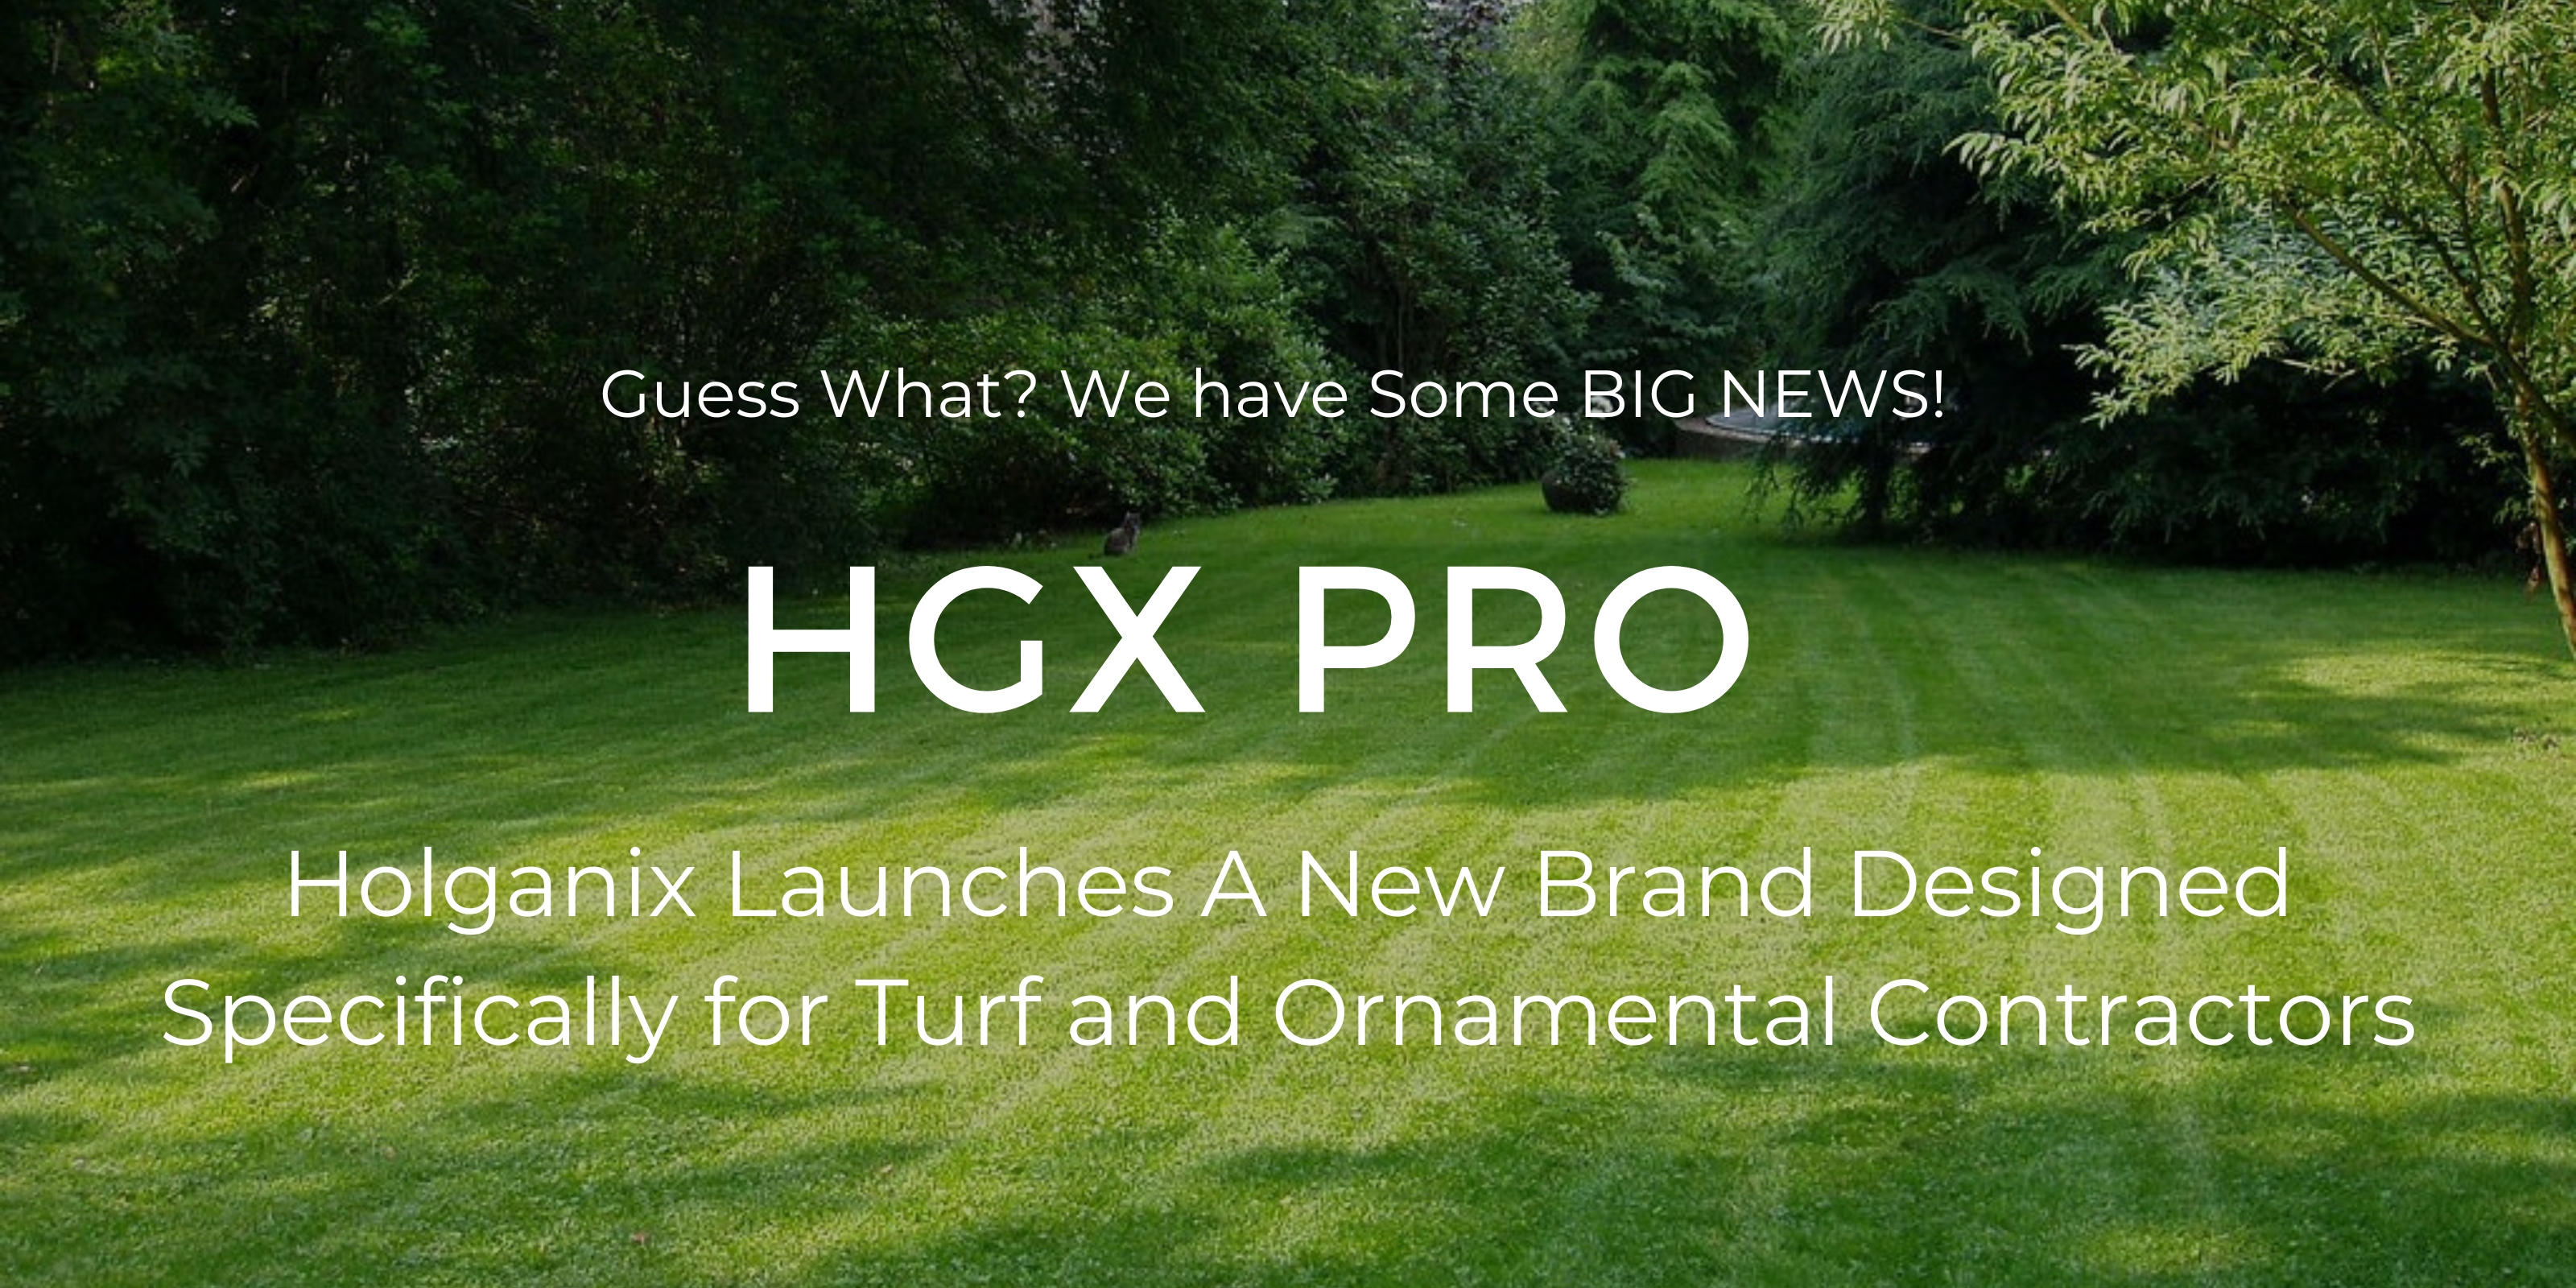 Big News! Holganix Launches a New Brand HGX Pro